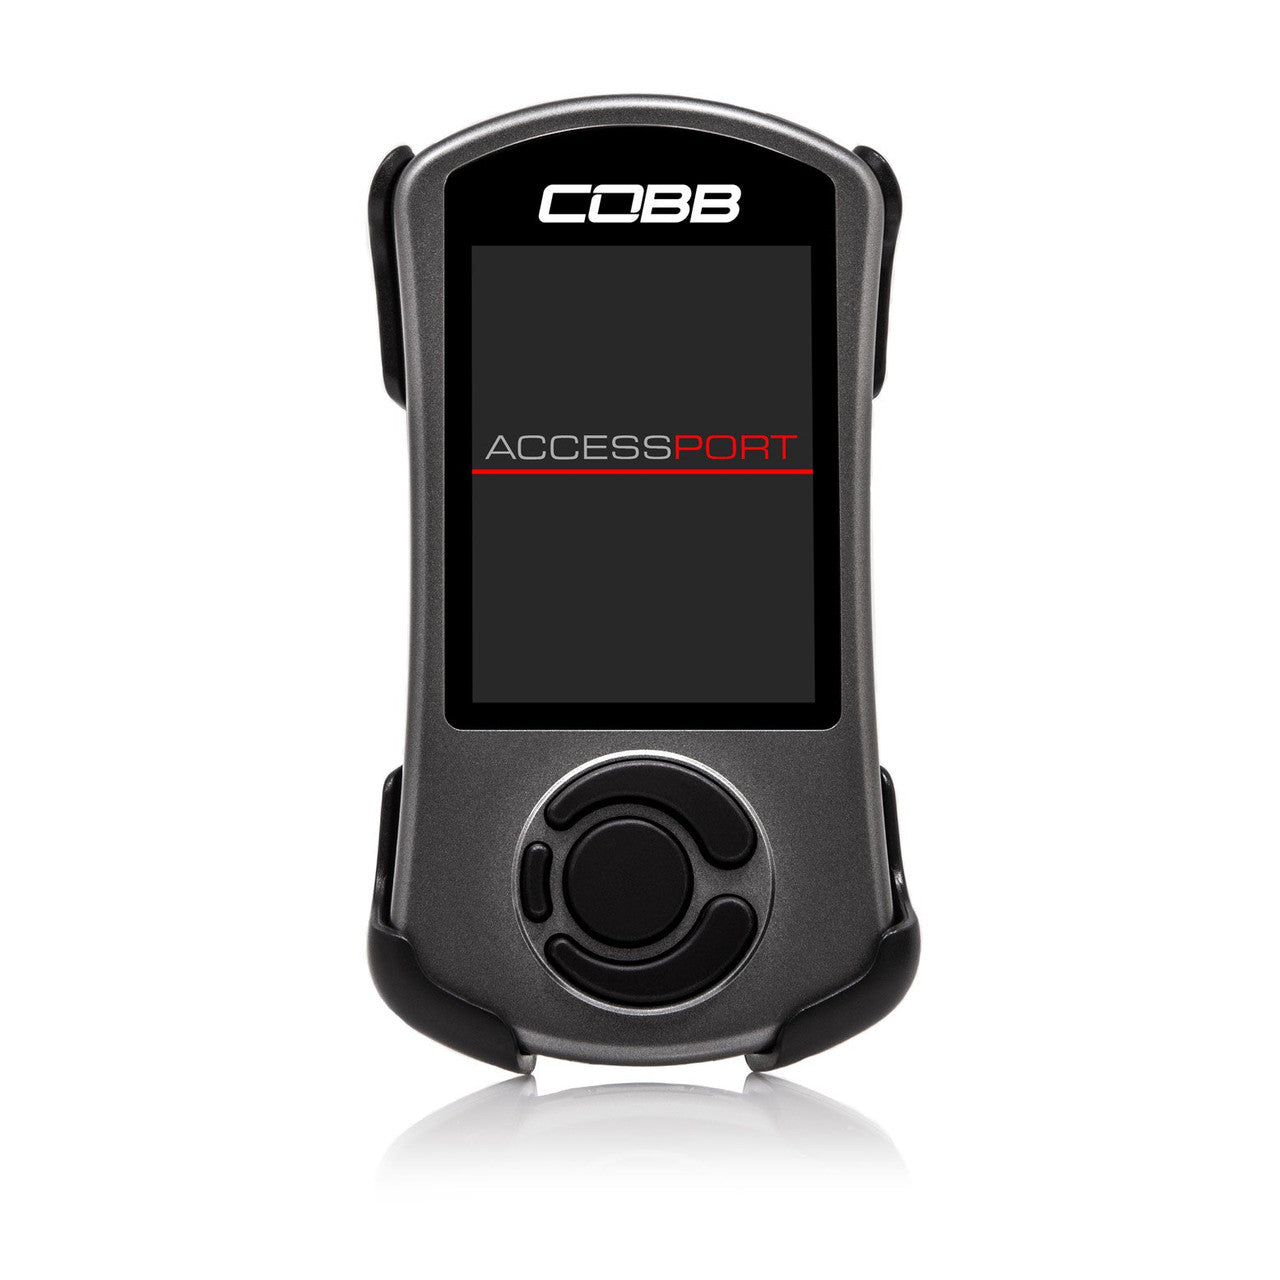 COBB Accessport V3 with TCM Flashing F-150 EcoBoost Raptor - Limited